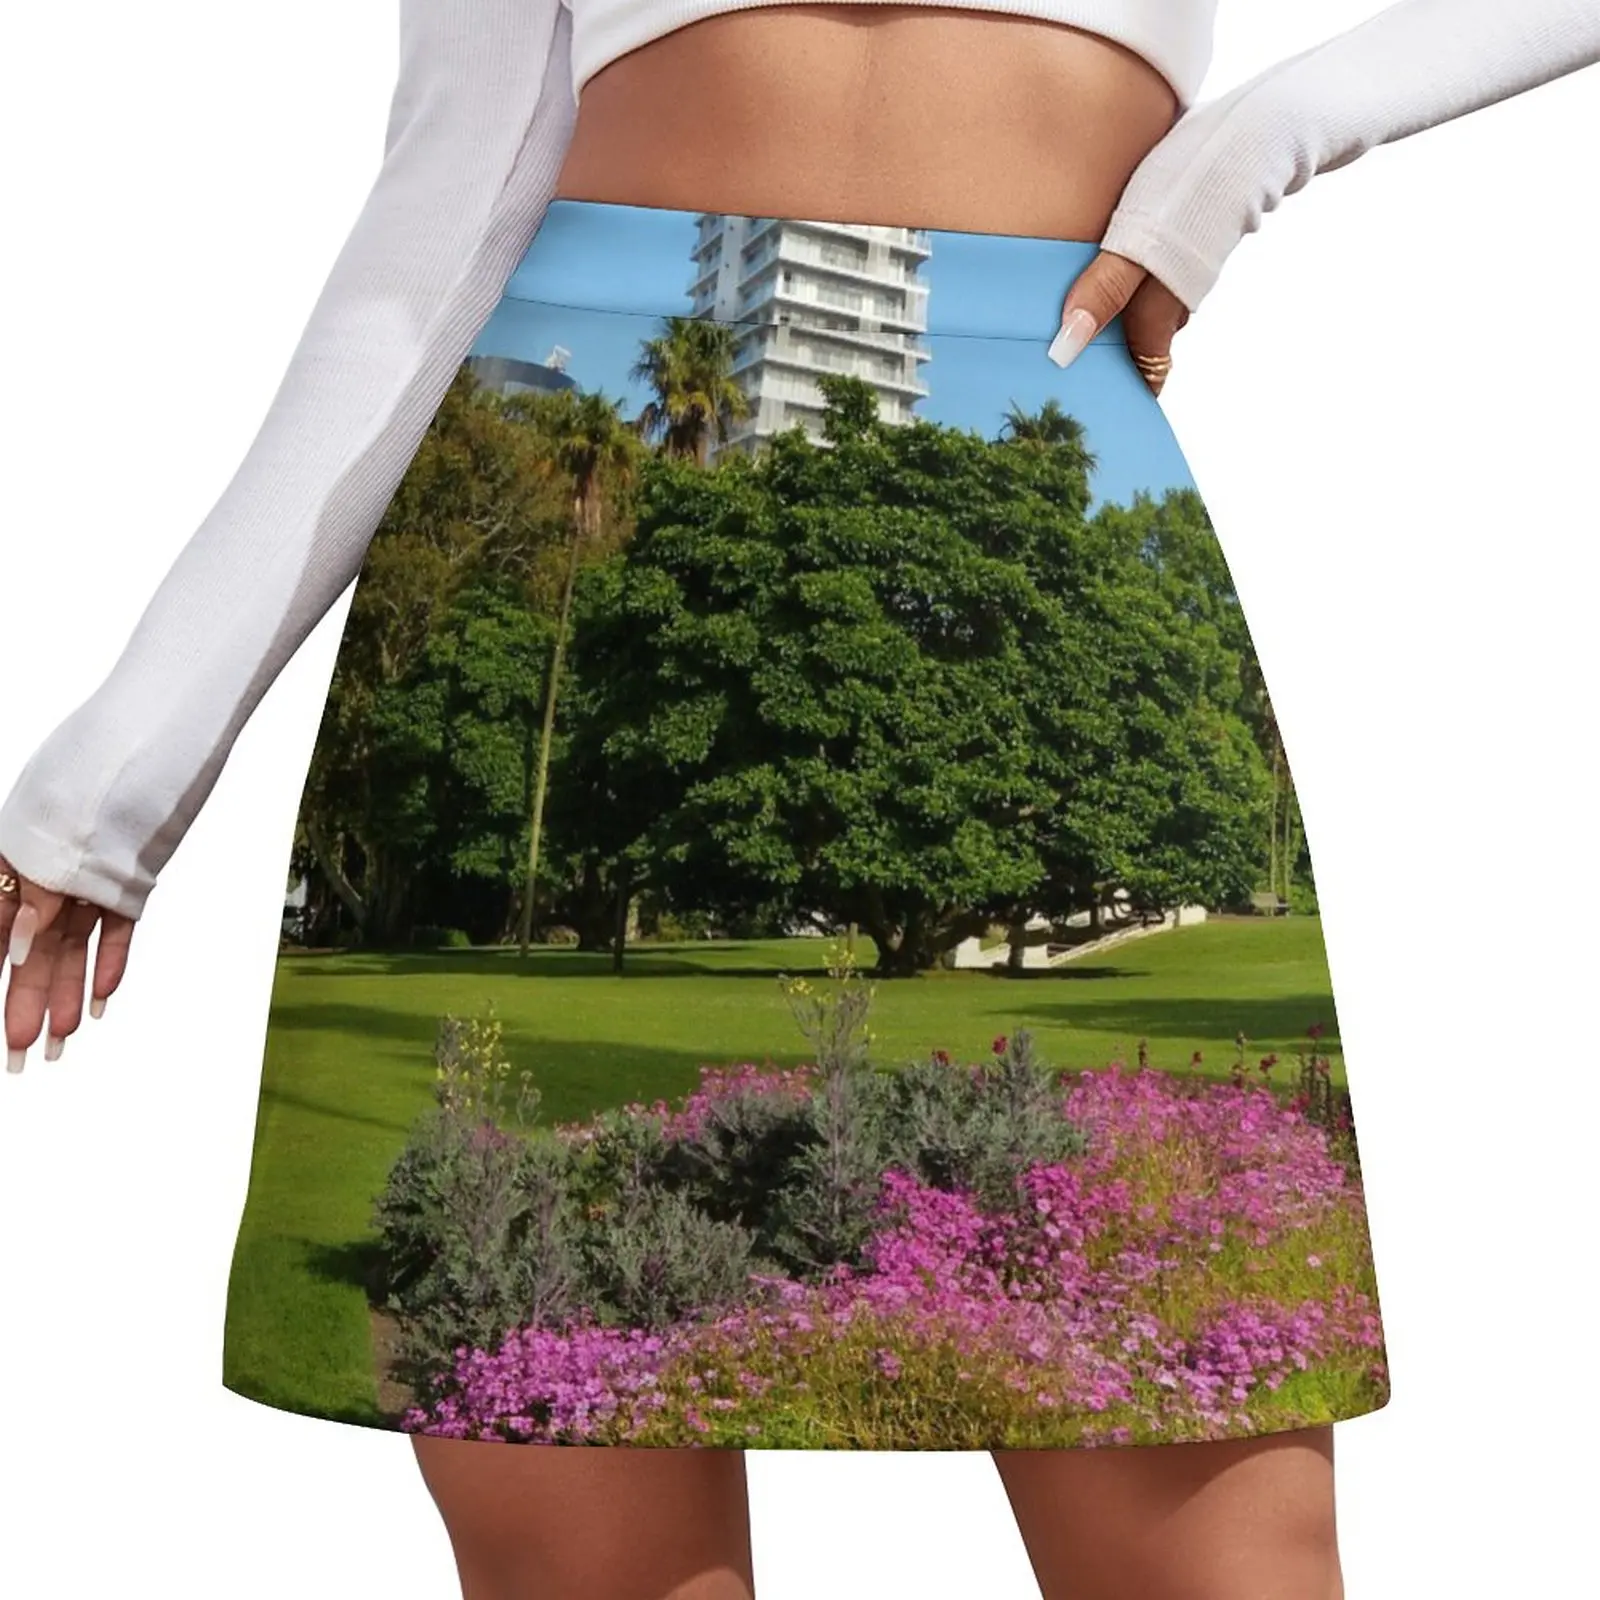 Auckland Mini Skirt Woman skirt Summer women's clothing summer dresses for women 2023 mini dresses striped pocket drawstring tie mini dress in multicolor size s